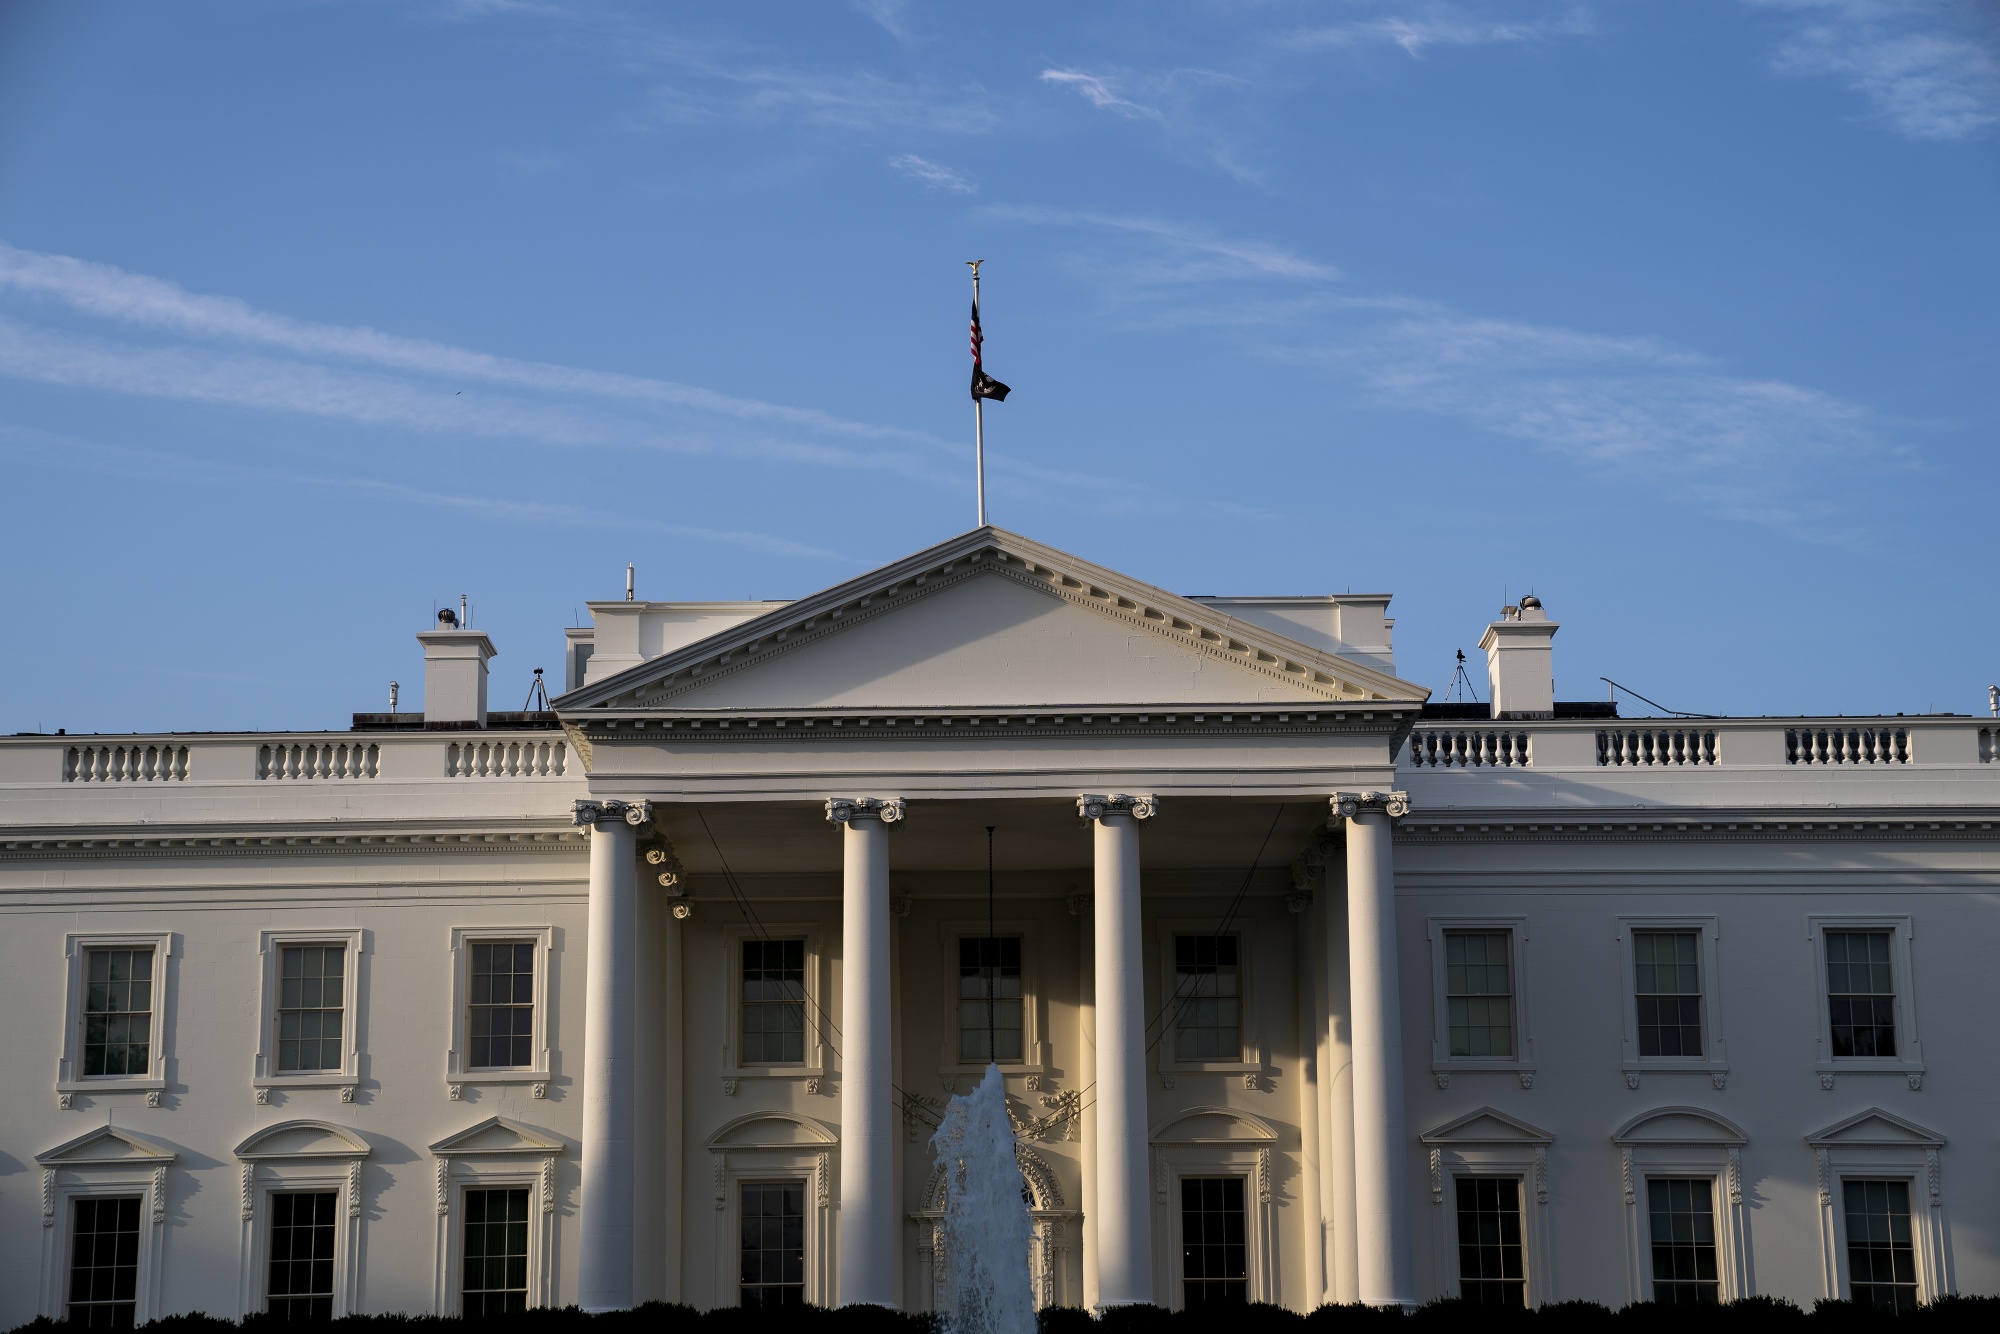 The White House in Washington, D.C.